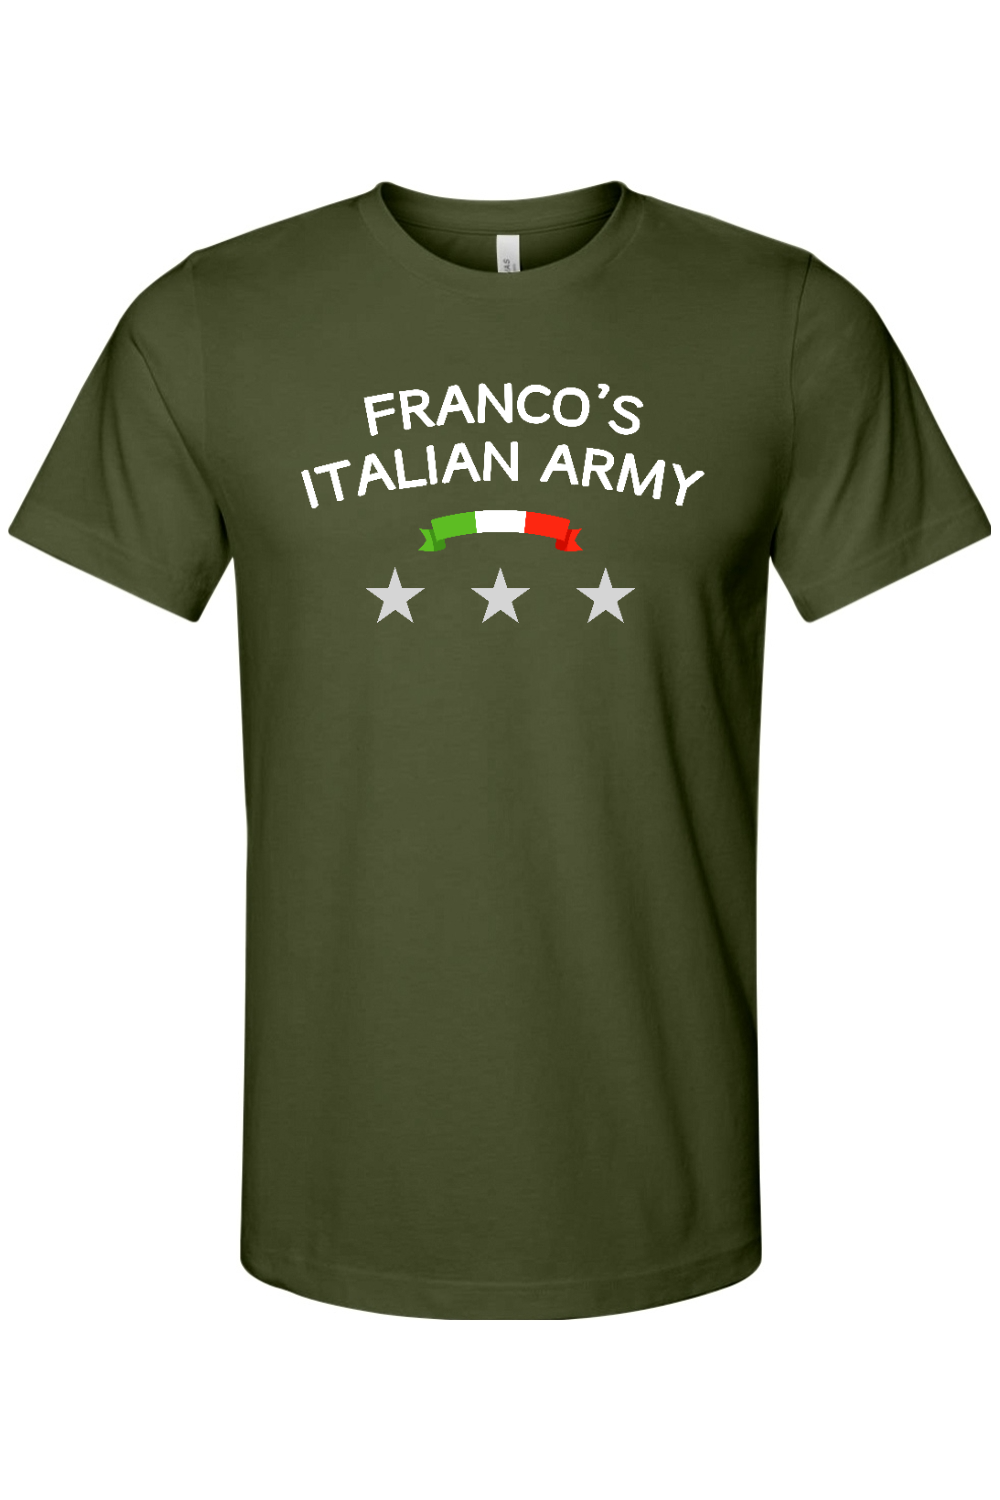 Franco's Italian Army - Bella + Canvas Jersey Tee - Yinzylvania